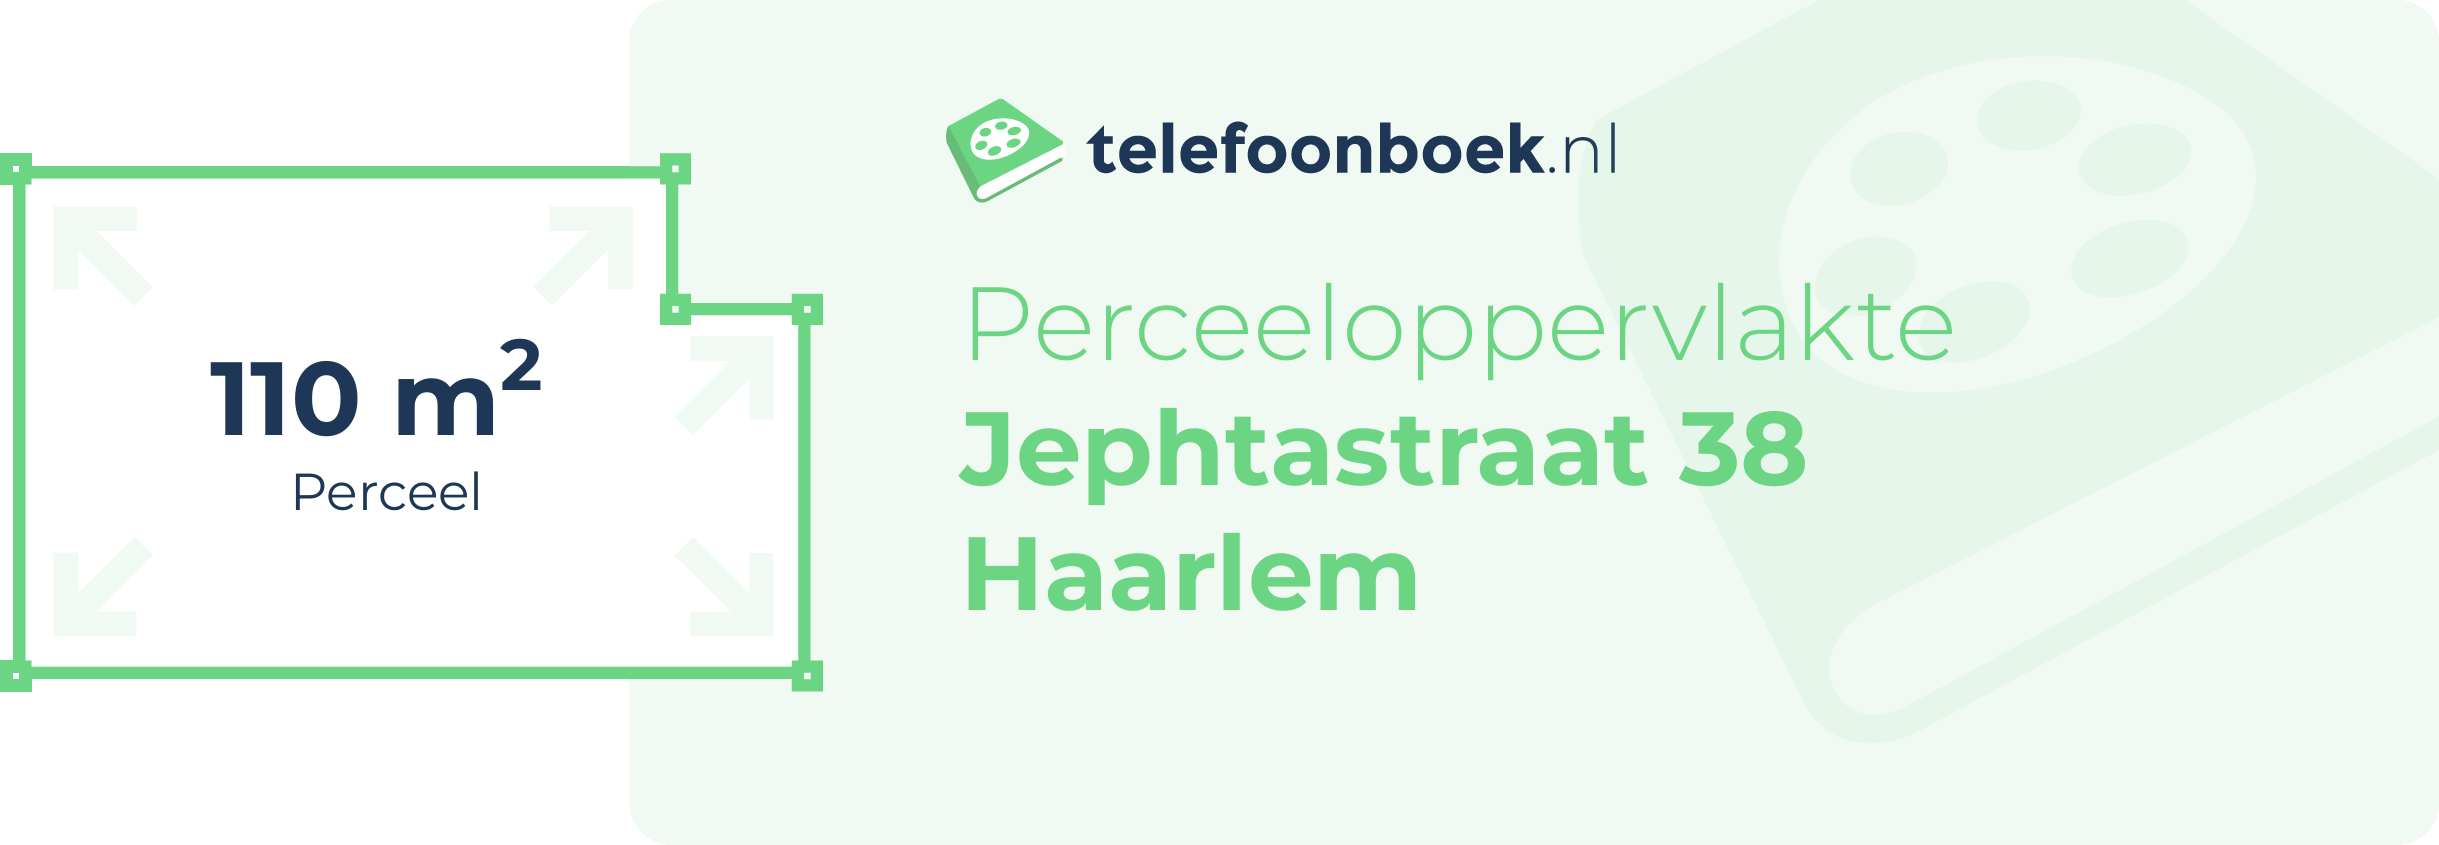 Perceeloppervlakte Jephtastraat 38 Haarlem